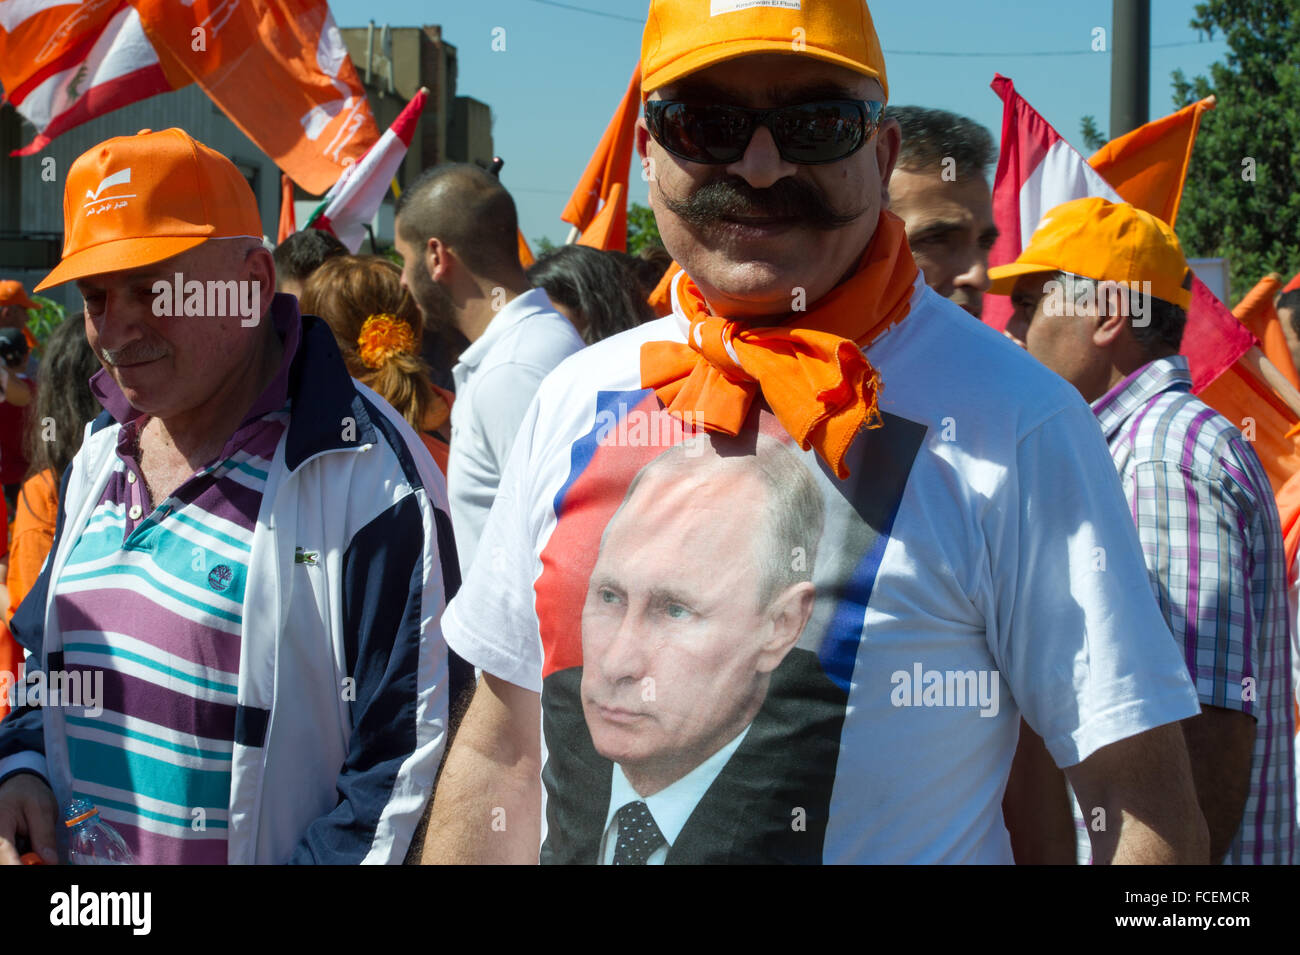 Hombre libanés desgaste manifestante ti-shirt Vlademir Putine presidente impreso en apoyo a la campaña Rusa en Siria contra ISIS Foto de stock